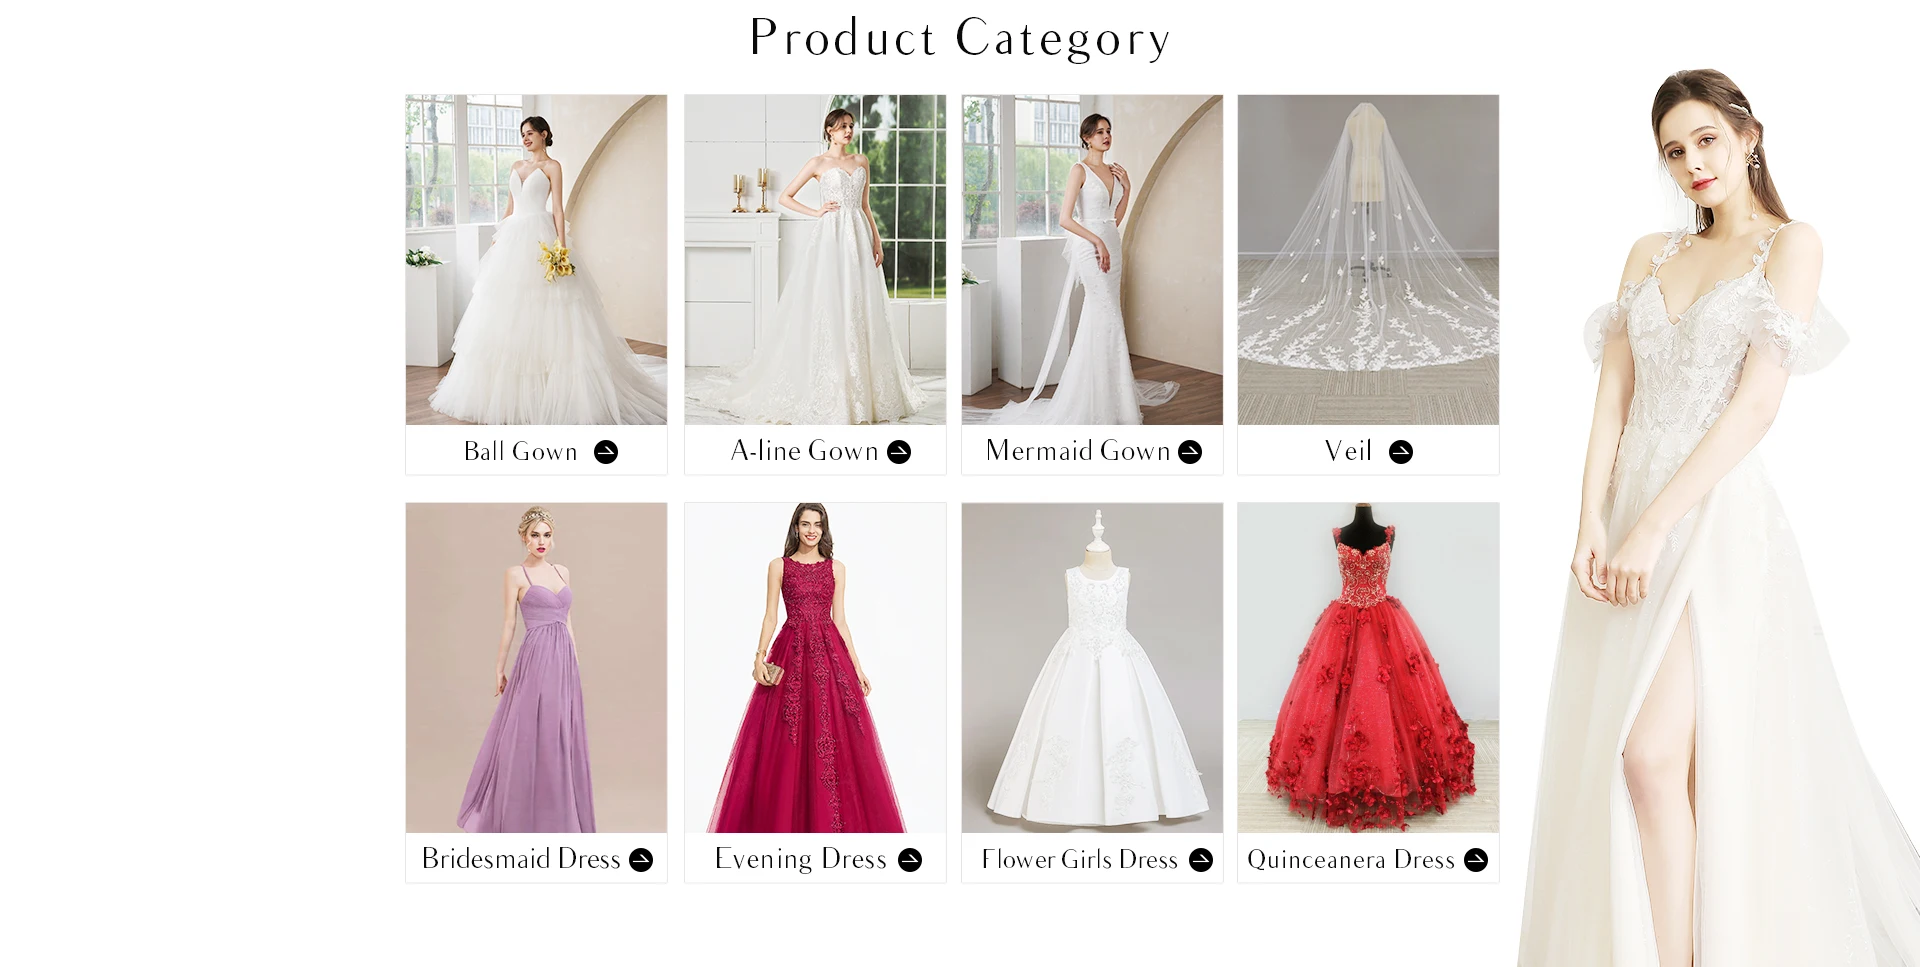 Guangzhou Angel Bridal Gown Factory - Wedding Dress, Bridesmaids Dress